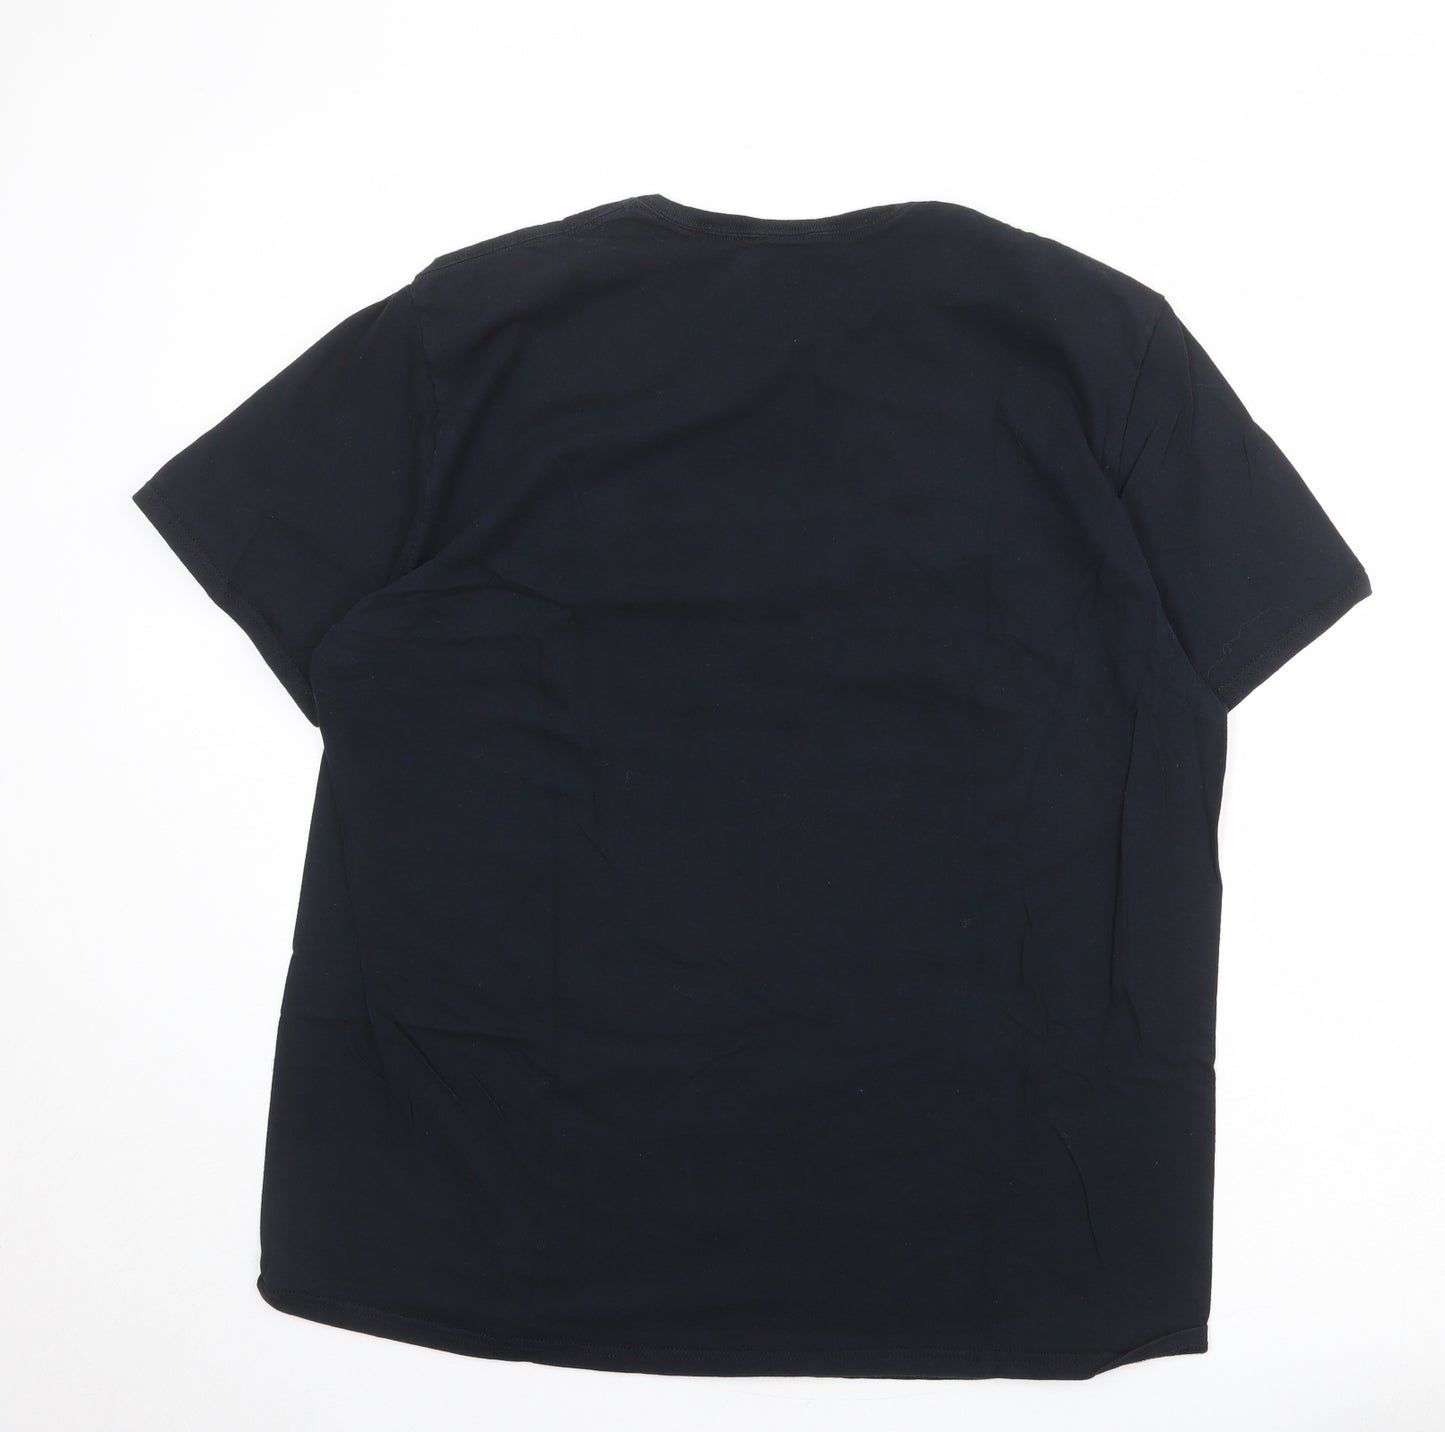 acdc Mens Black Cotton T-Shirt Size 2XL Round Neck